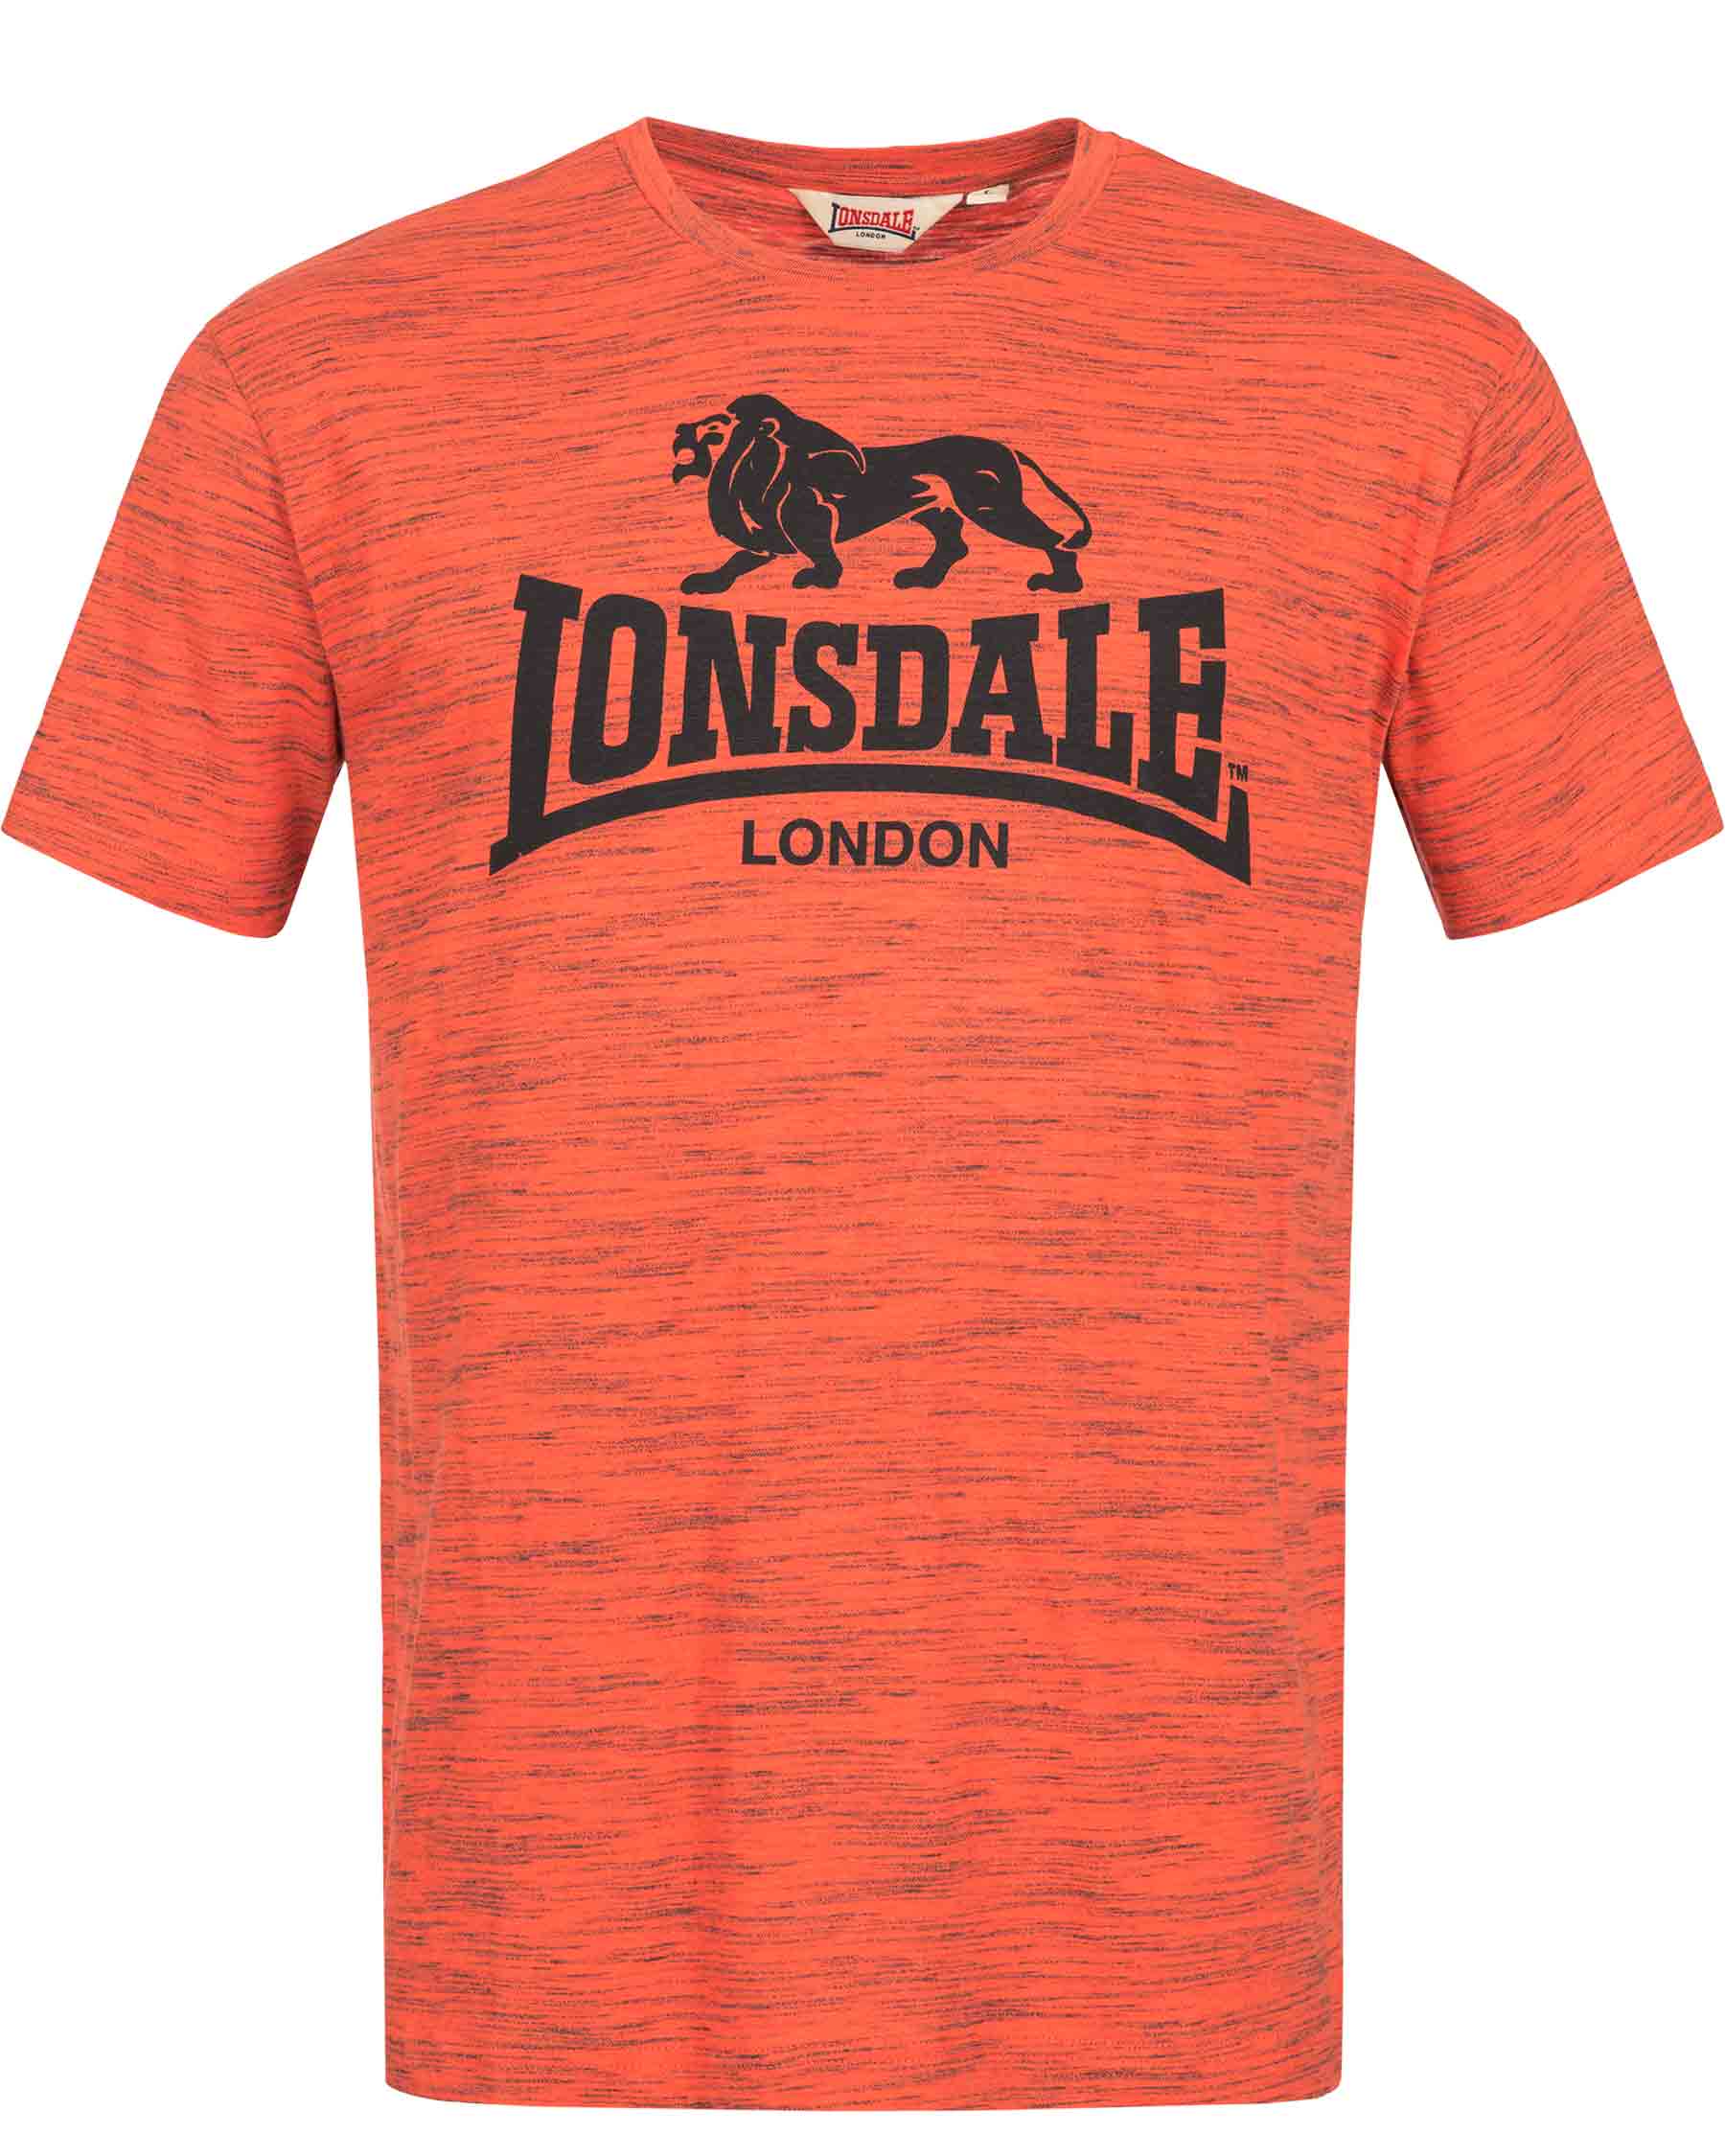 parachute Nadeel Natura Lonsdale regular fit t-shirt Gargrave - Heren T-Shirt - Lonsdale London